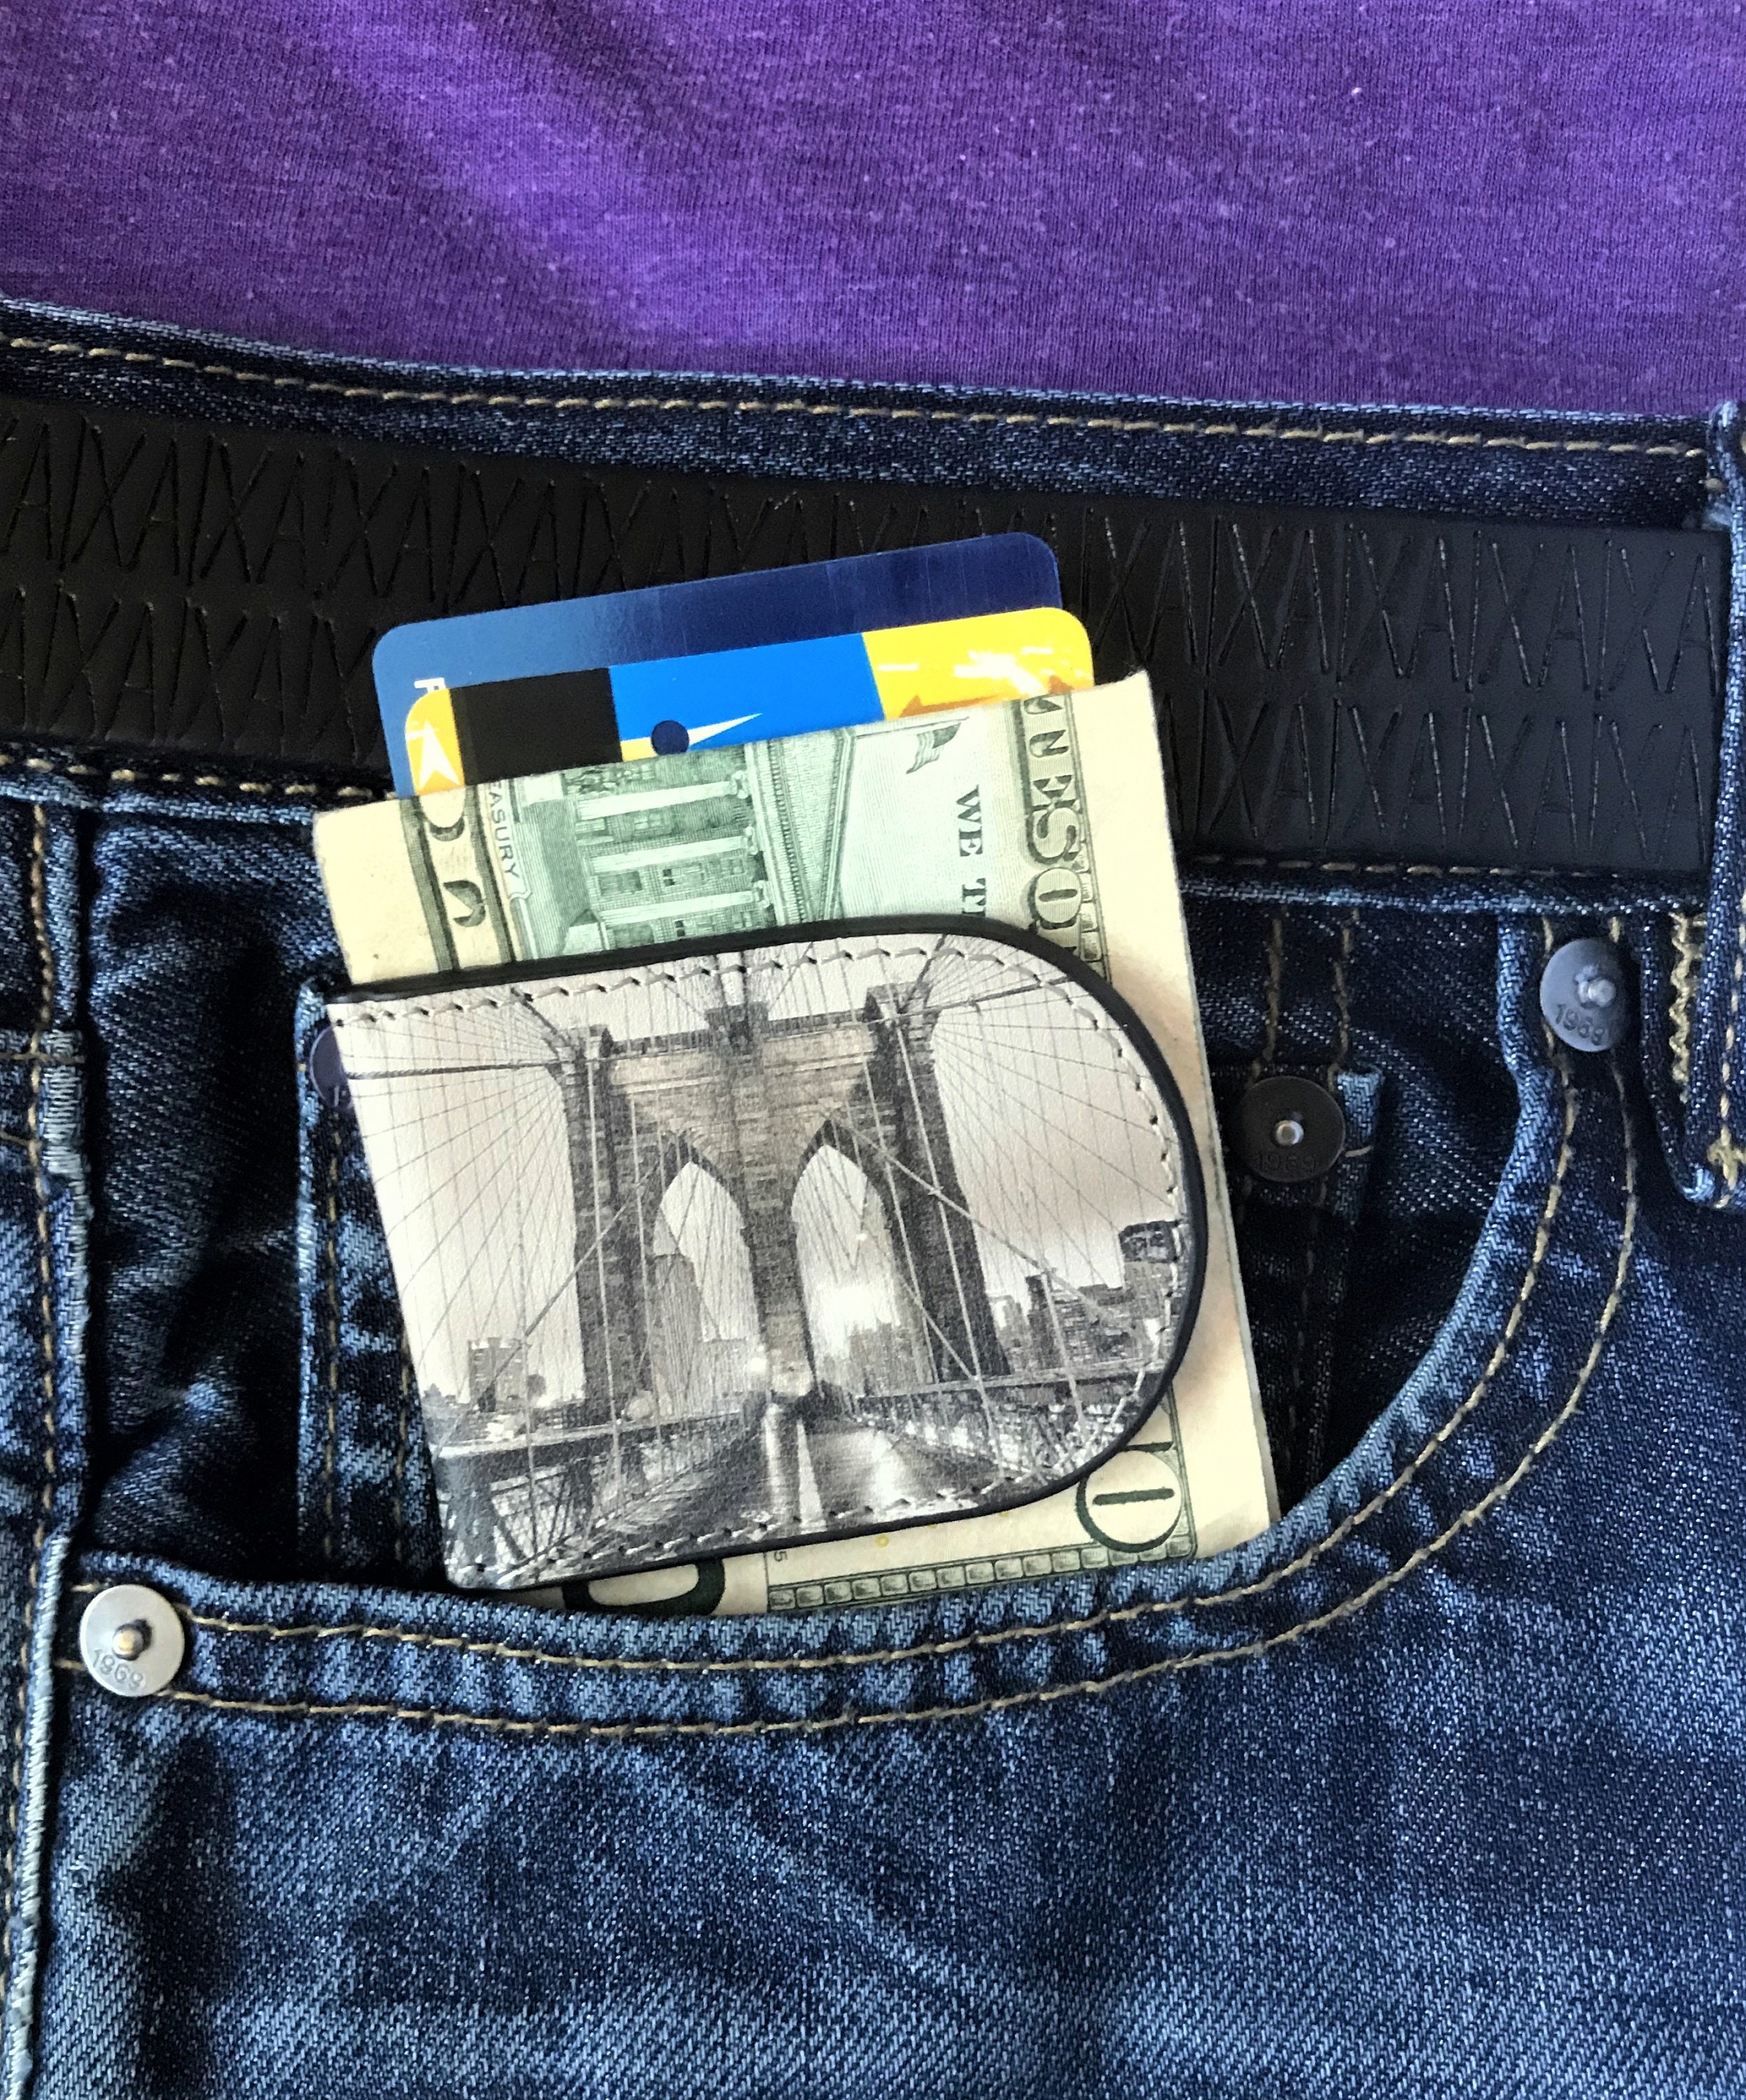 Brooklyn Bridge: Brooklyn Bridge Real Leather Money Clip Wallet